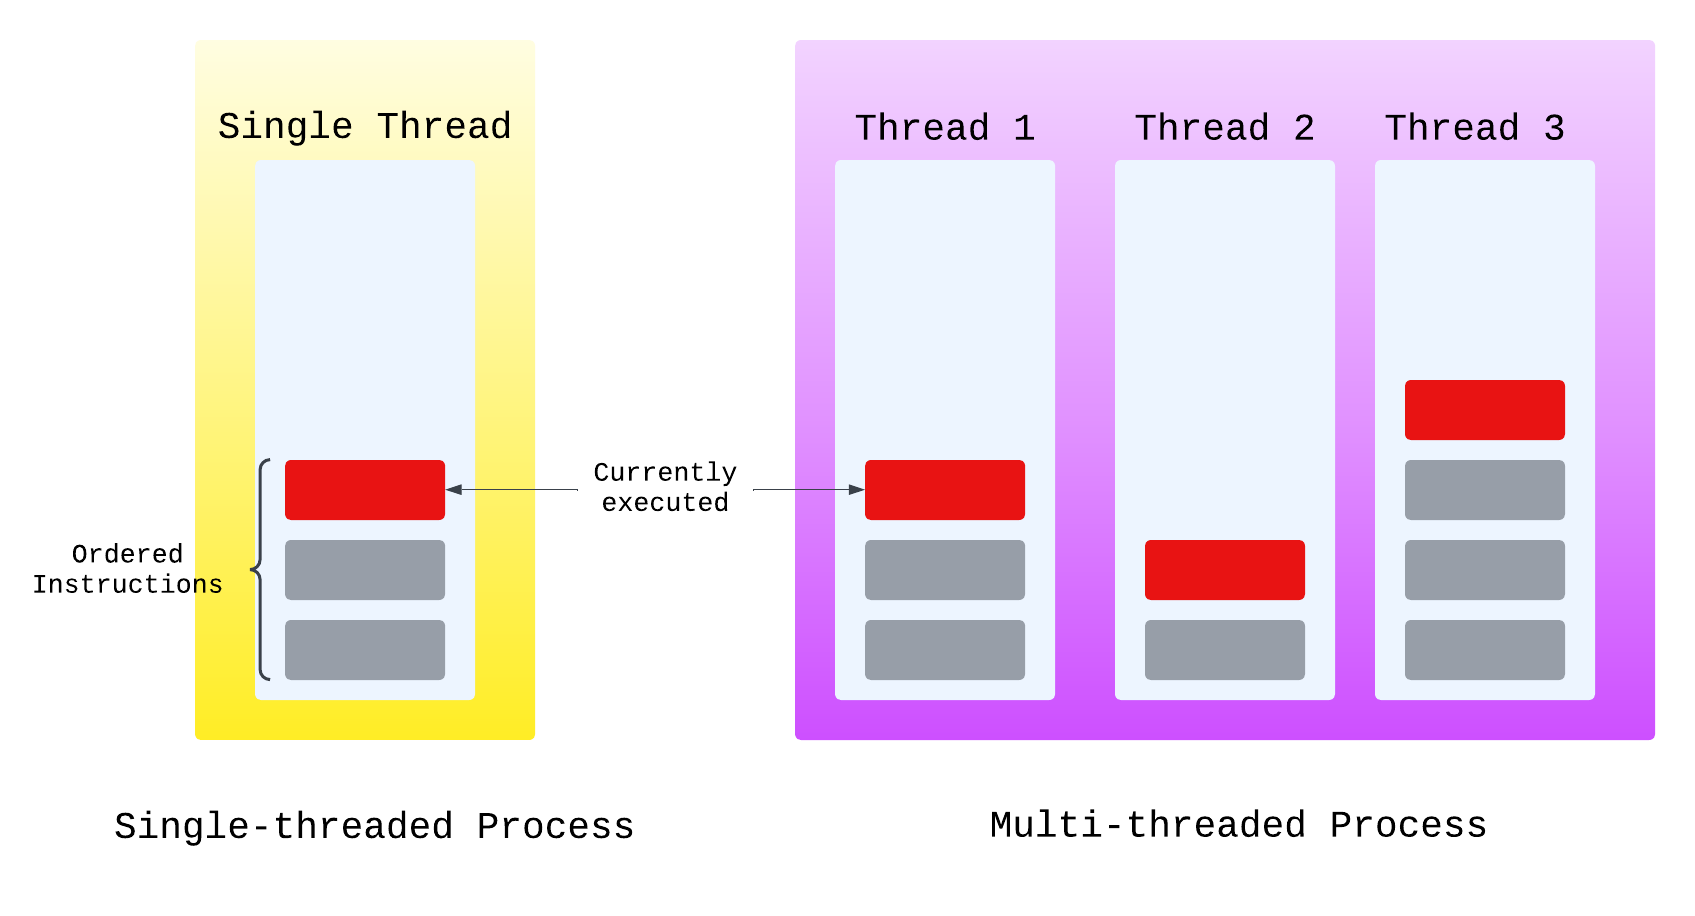 Illustration depicting Single-threaded and Multi-threaded processes